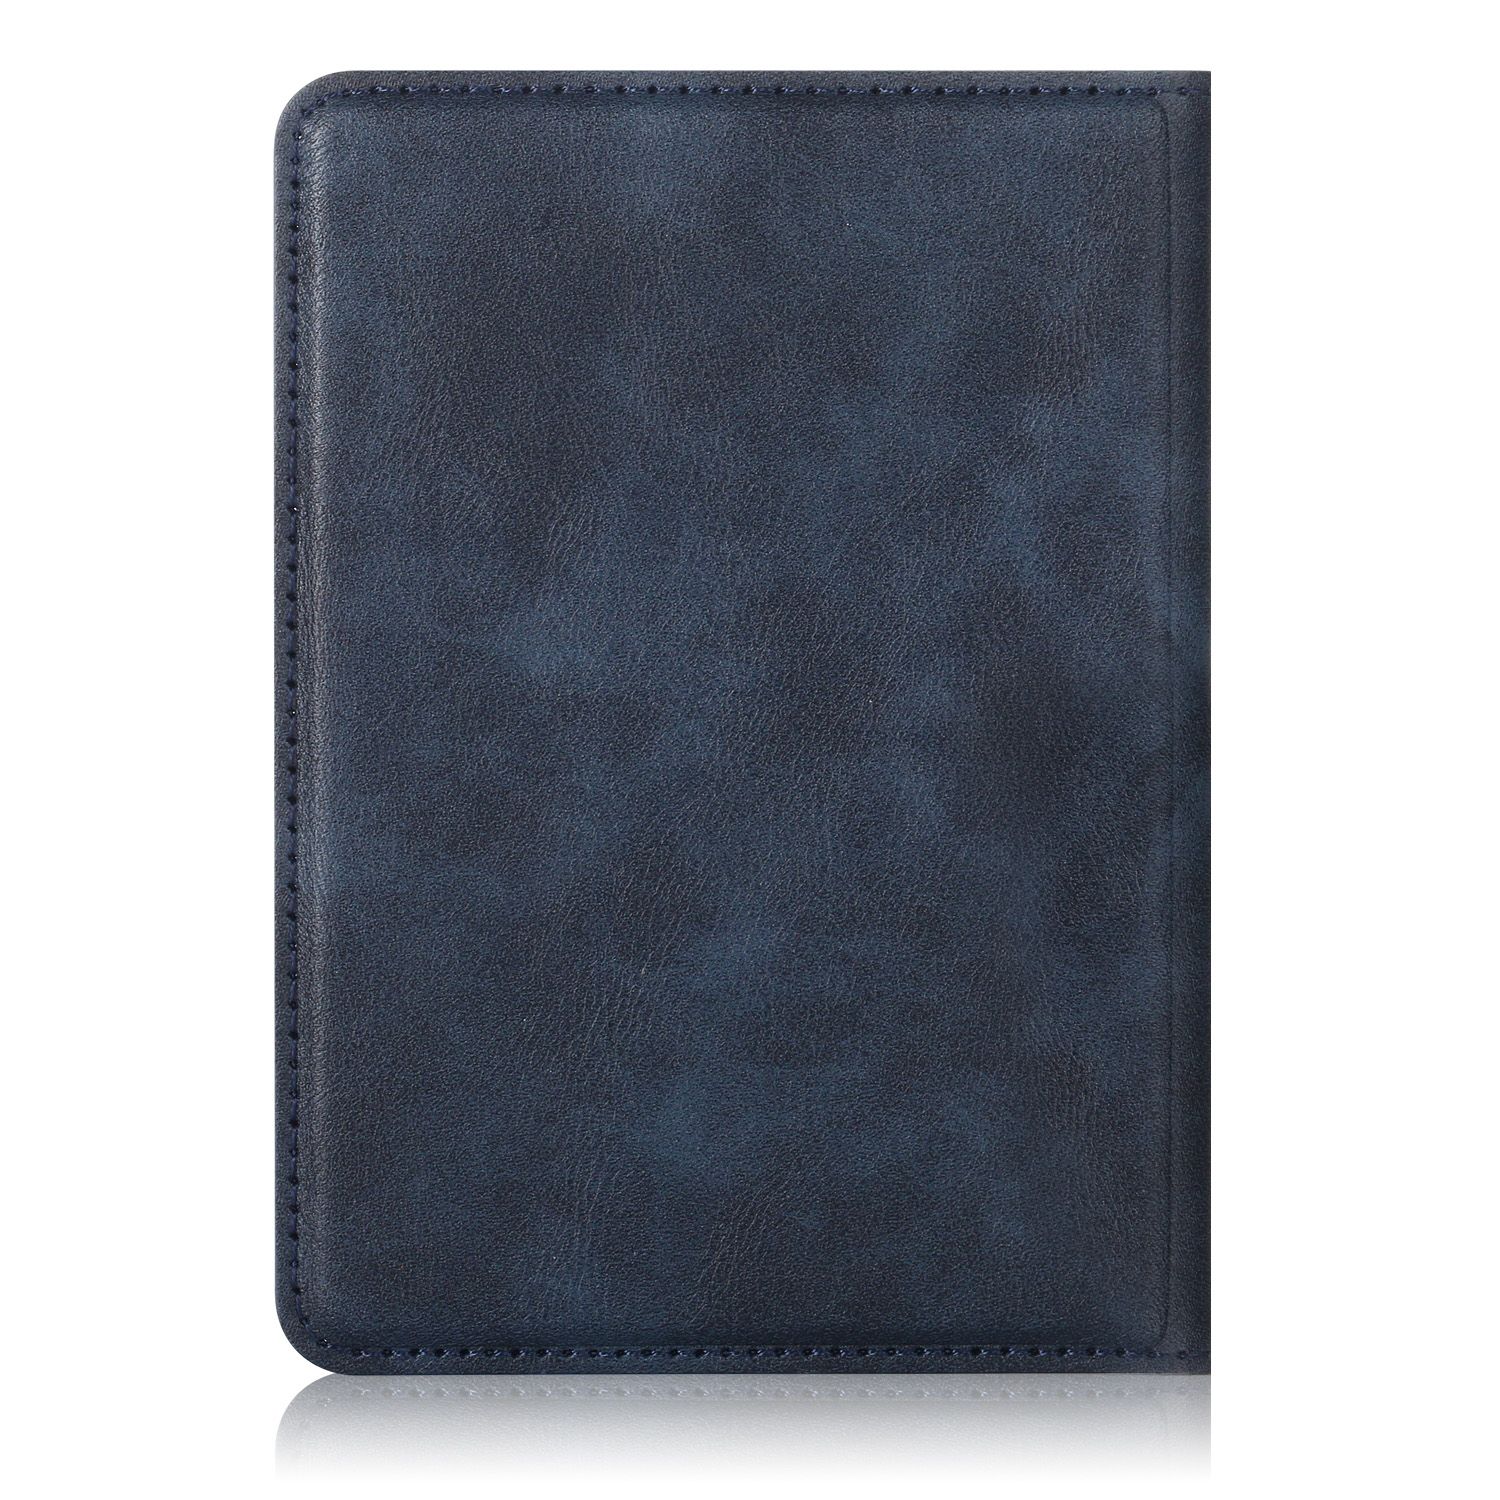 Printing-Passport-Tablet-Case---Dark-Blue-1591520